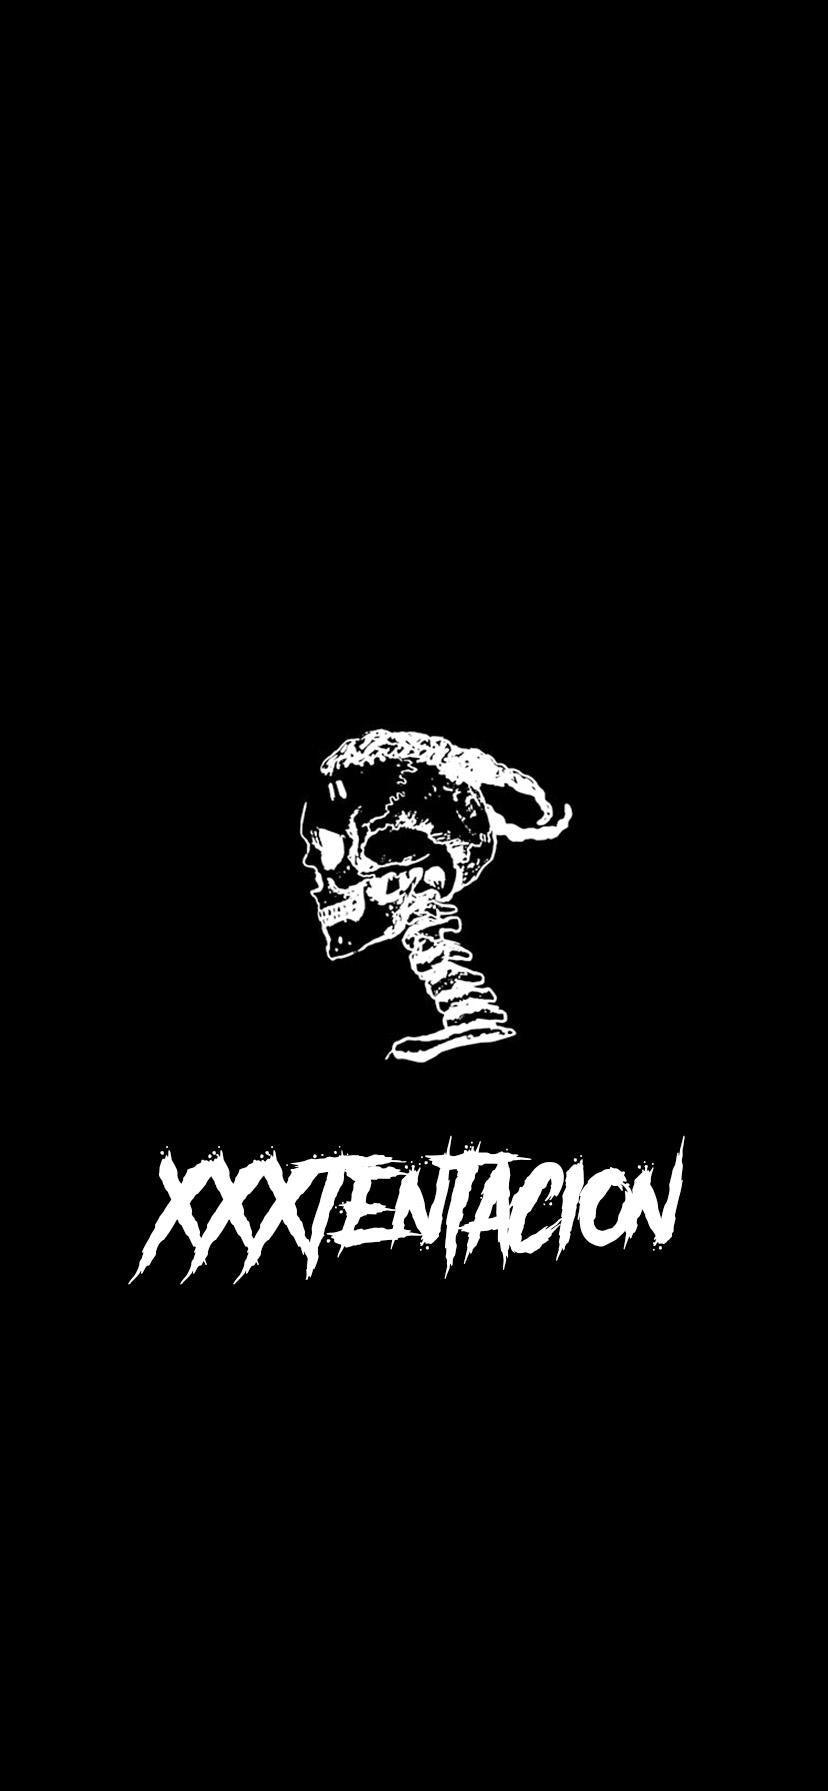 Xxxtentacion Rapper iPhone Wallpapers on WallpaperDog